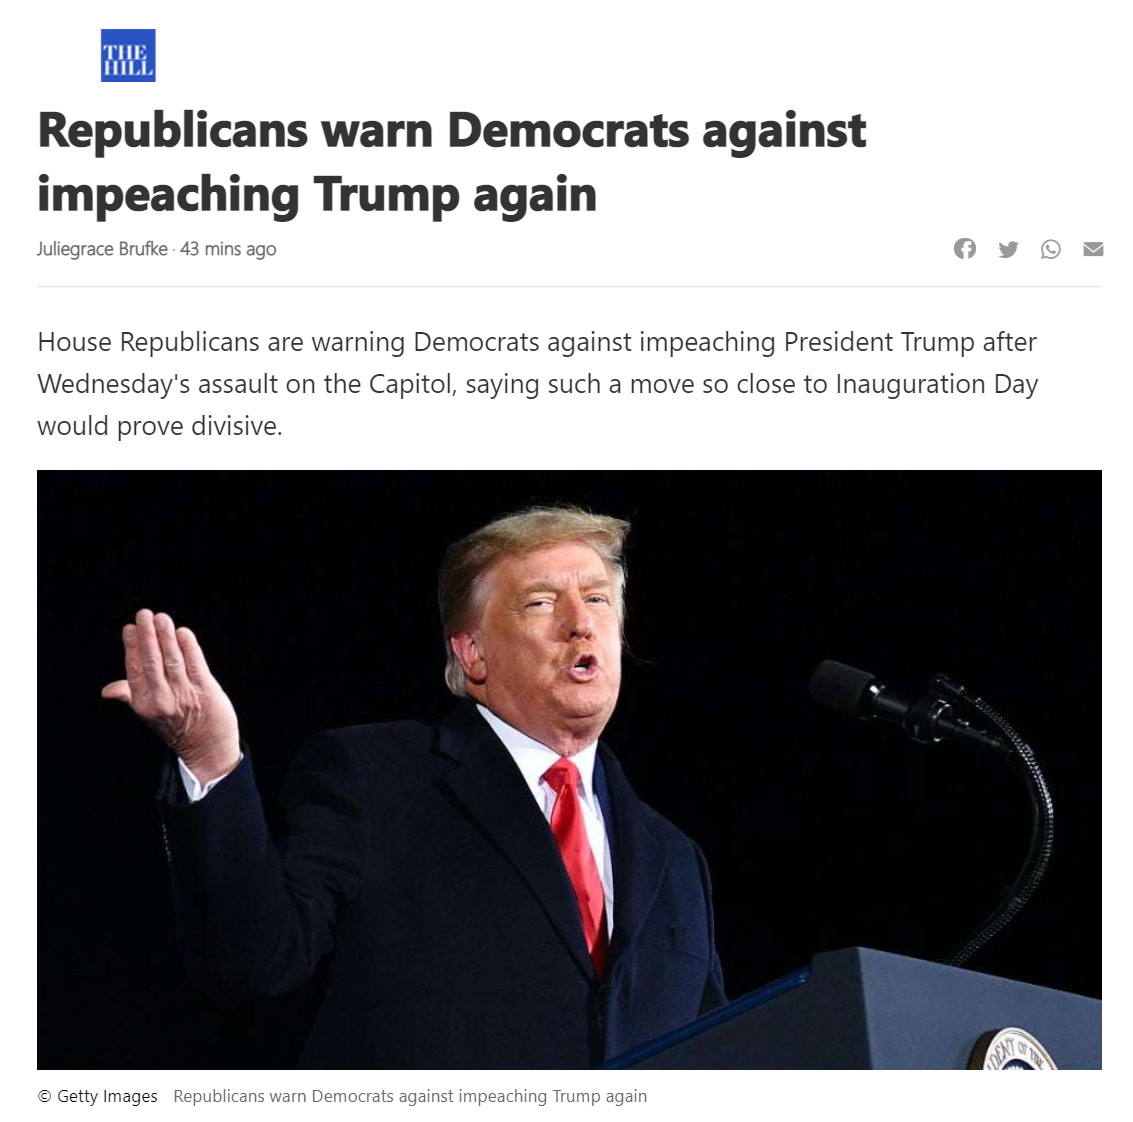 High Quality Republicans warn Democrats impeachment Blank Meme Template